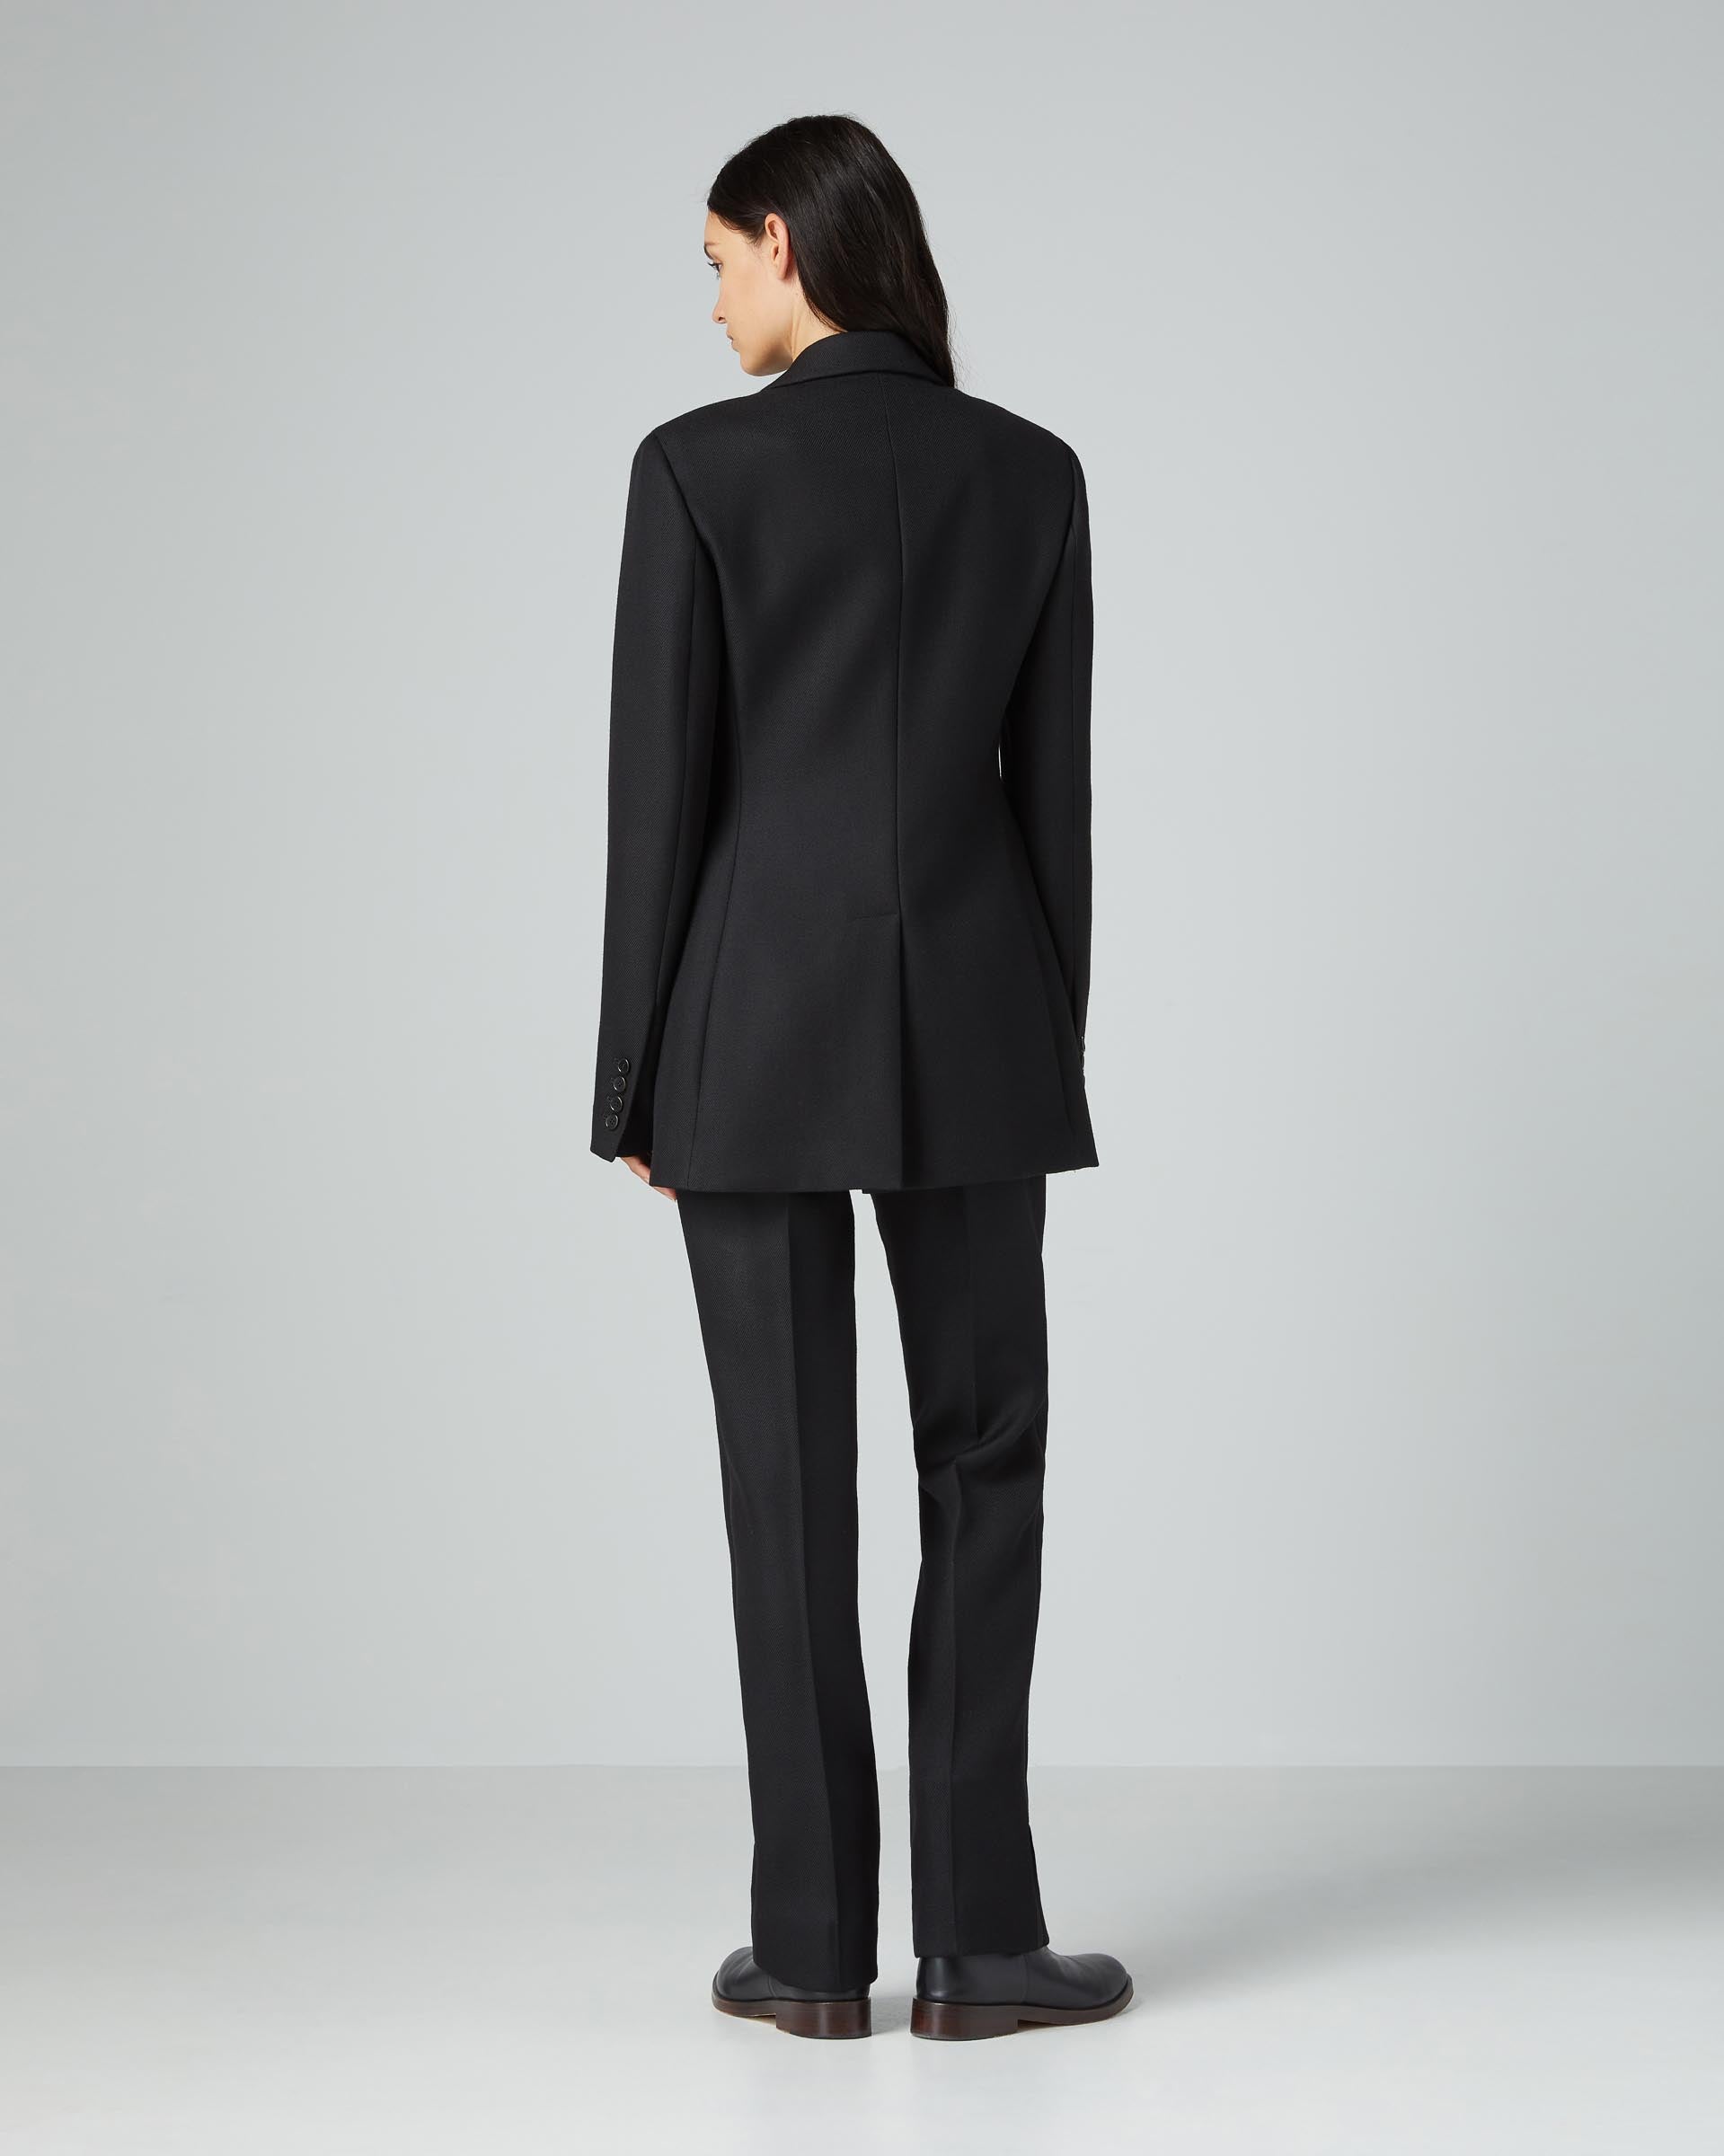 Giulia Tuxedo Jacket in Wool Twill, Black